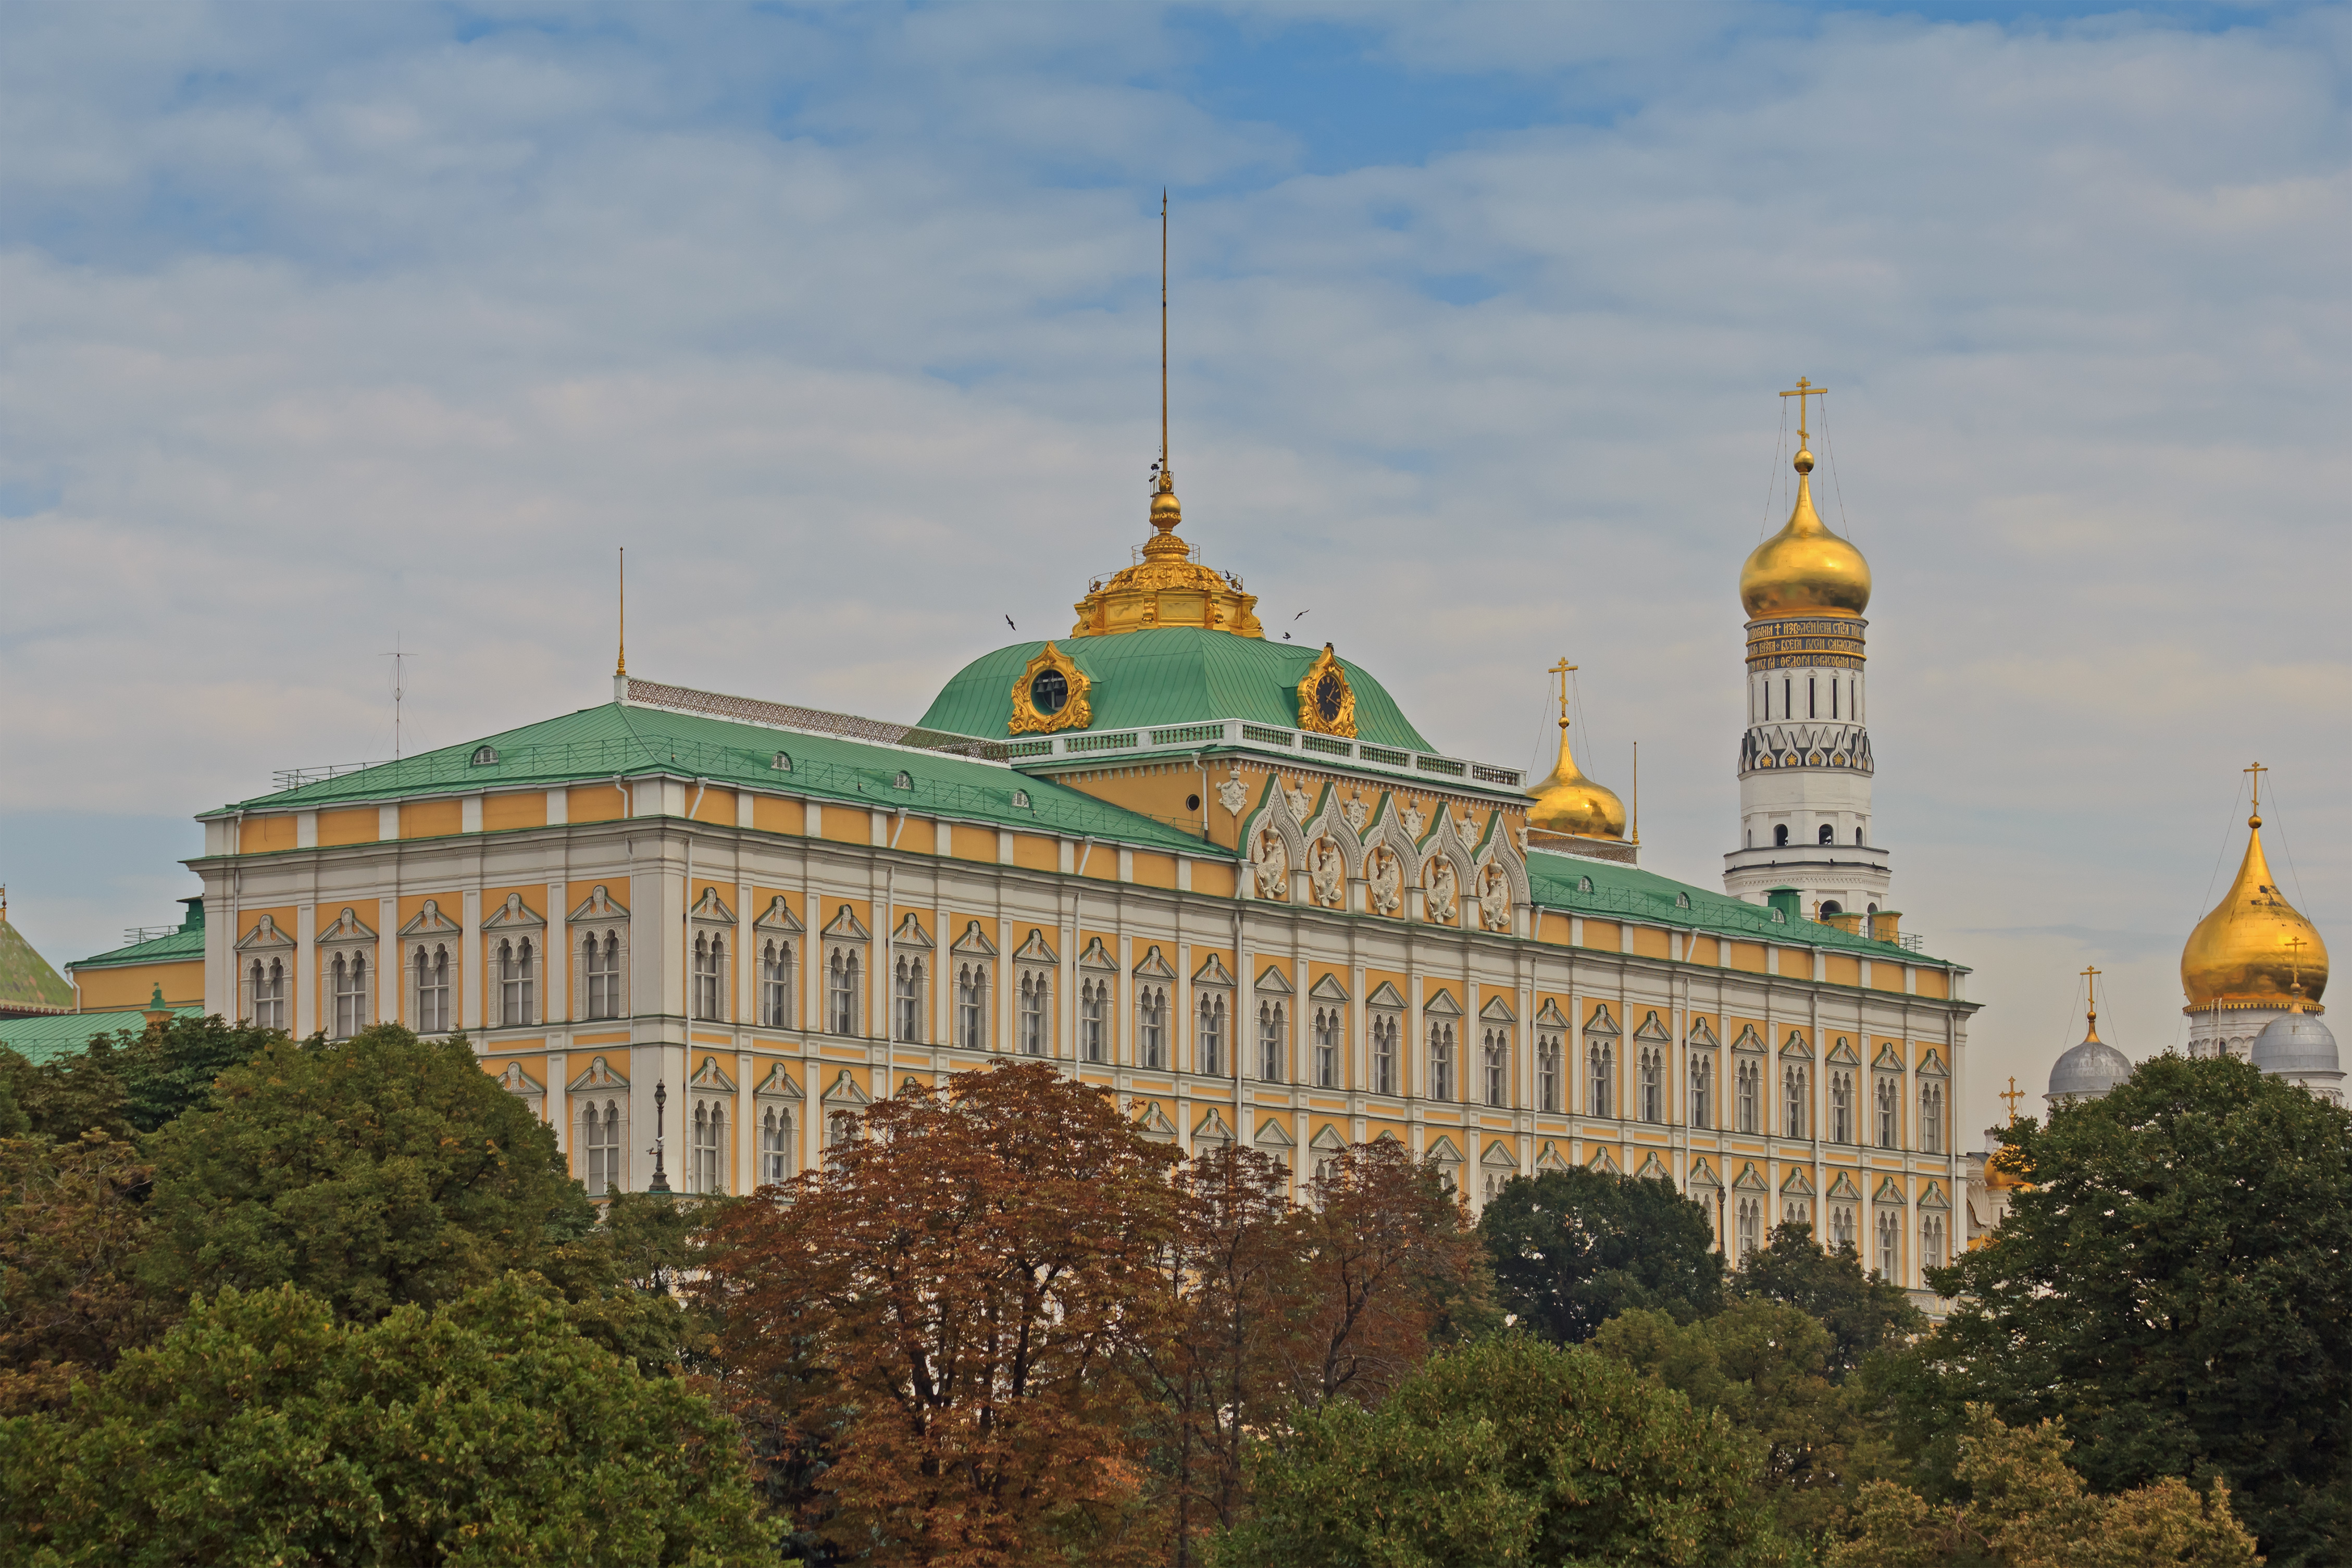 Moscow 09-13 img20 Grand Kremlin Palace